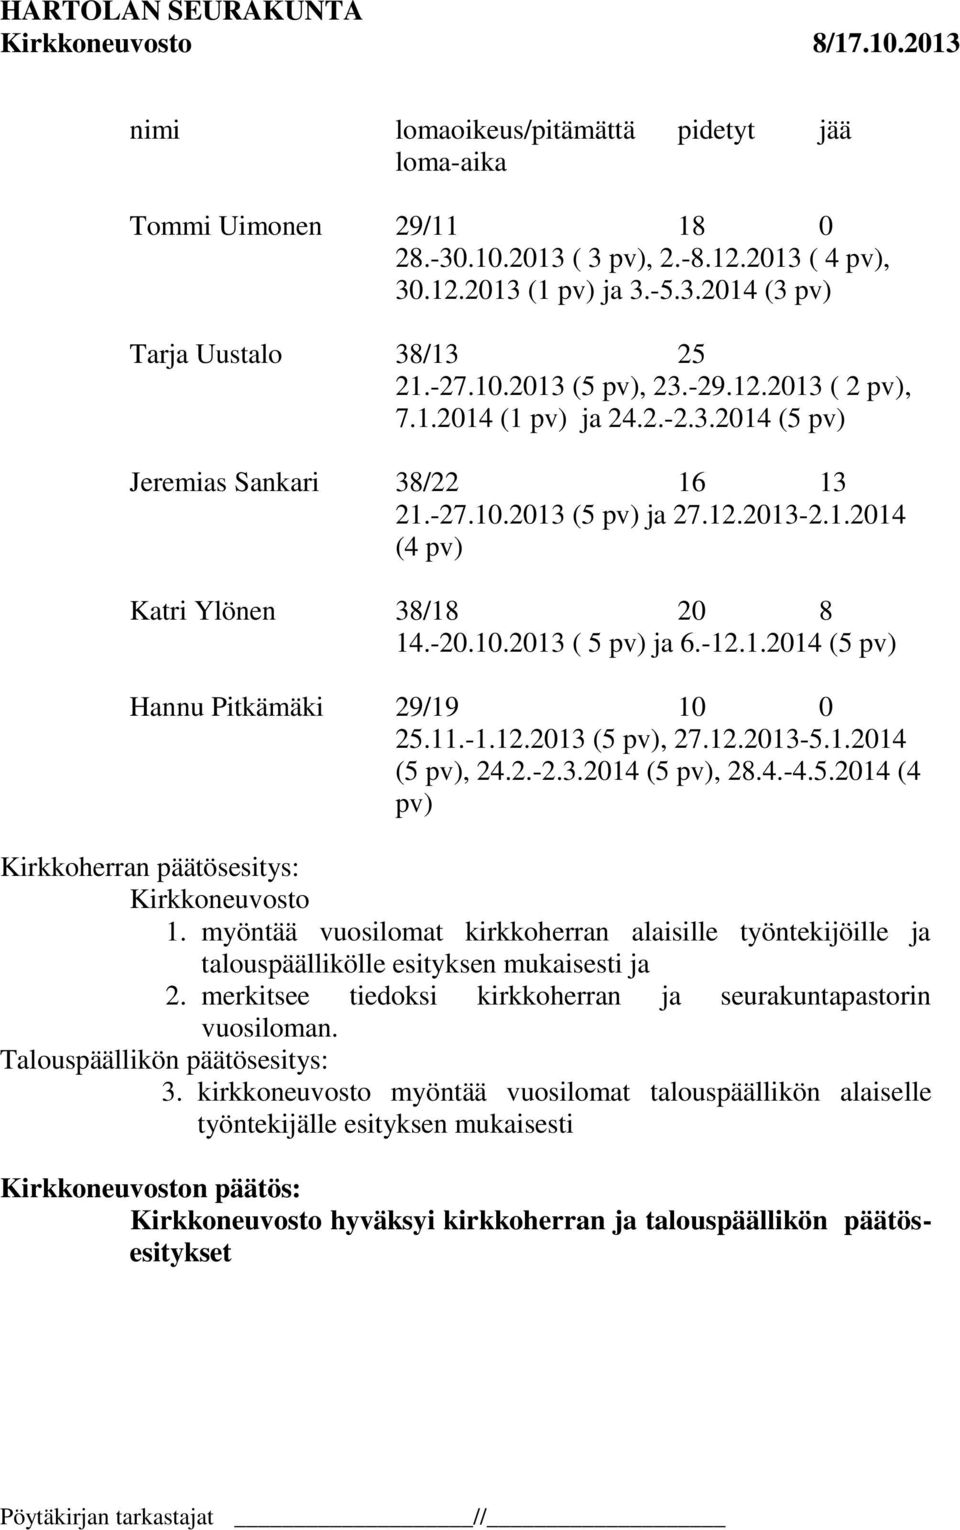 1.2014 (5 pv) Hannu Pitkämäki 29/19 10 0 25.11.-1.12.2013 (5 pv), 27.12.2013-5.1.2014 (5 pv), 24.2.-2.3.2014 (5 pv), 28.4.-4.5.2014 (4 pv) Kirkkoherran päätösesitys: Kirkkoneuvosto 1.